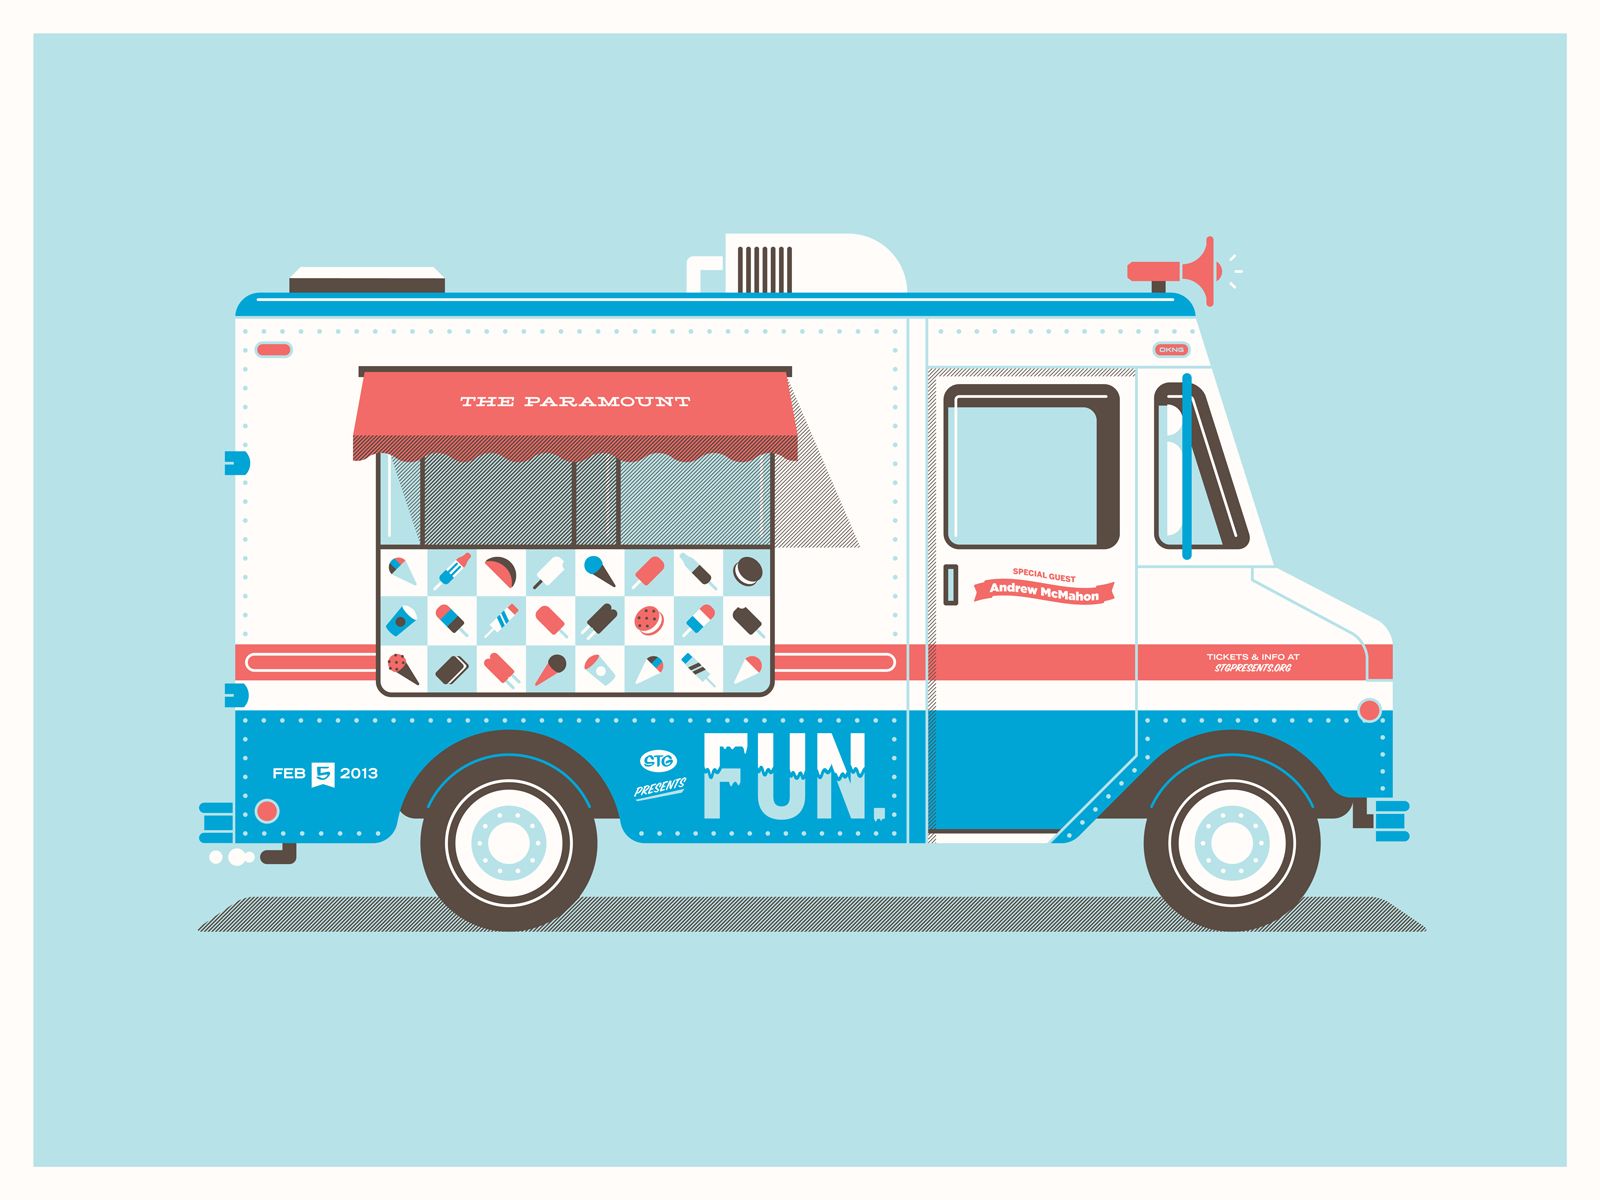 Ice Cream Truck Wallpapers